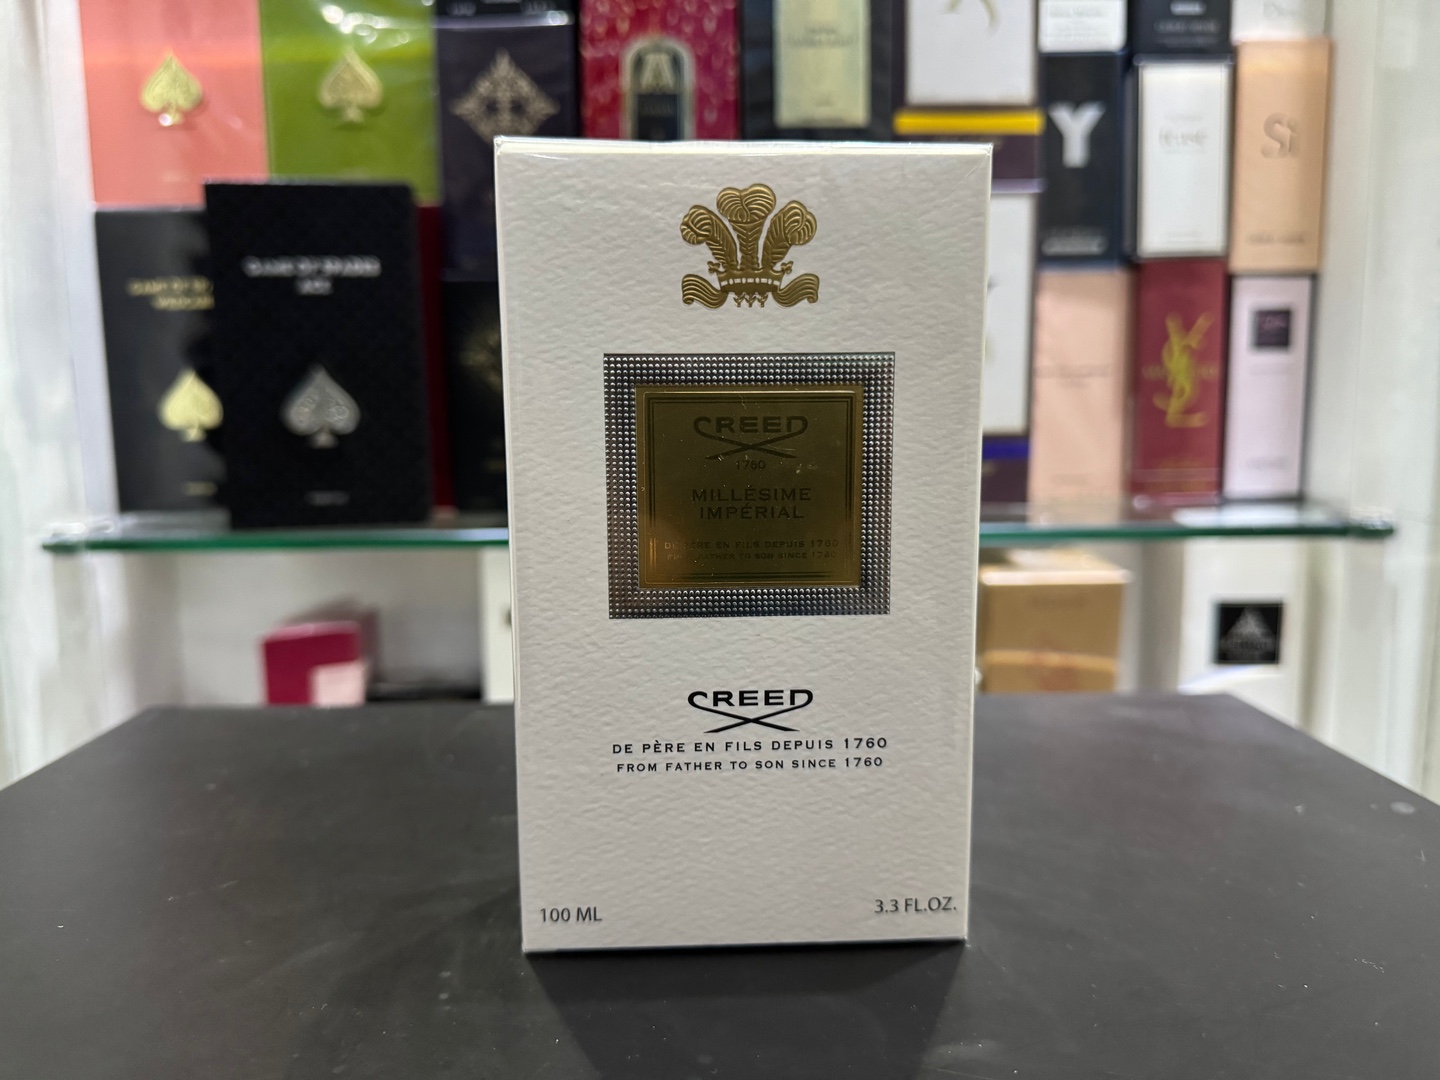 joyas, relojes y accesorios - Perfume Creed imperial Millesime 100ML Nuevo, Autentico, RD$ 18,500 NEG